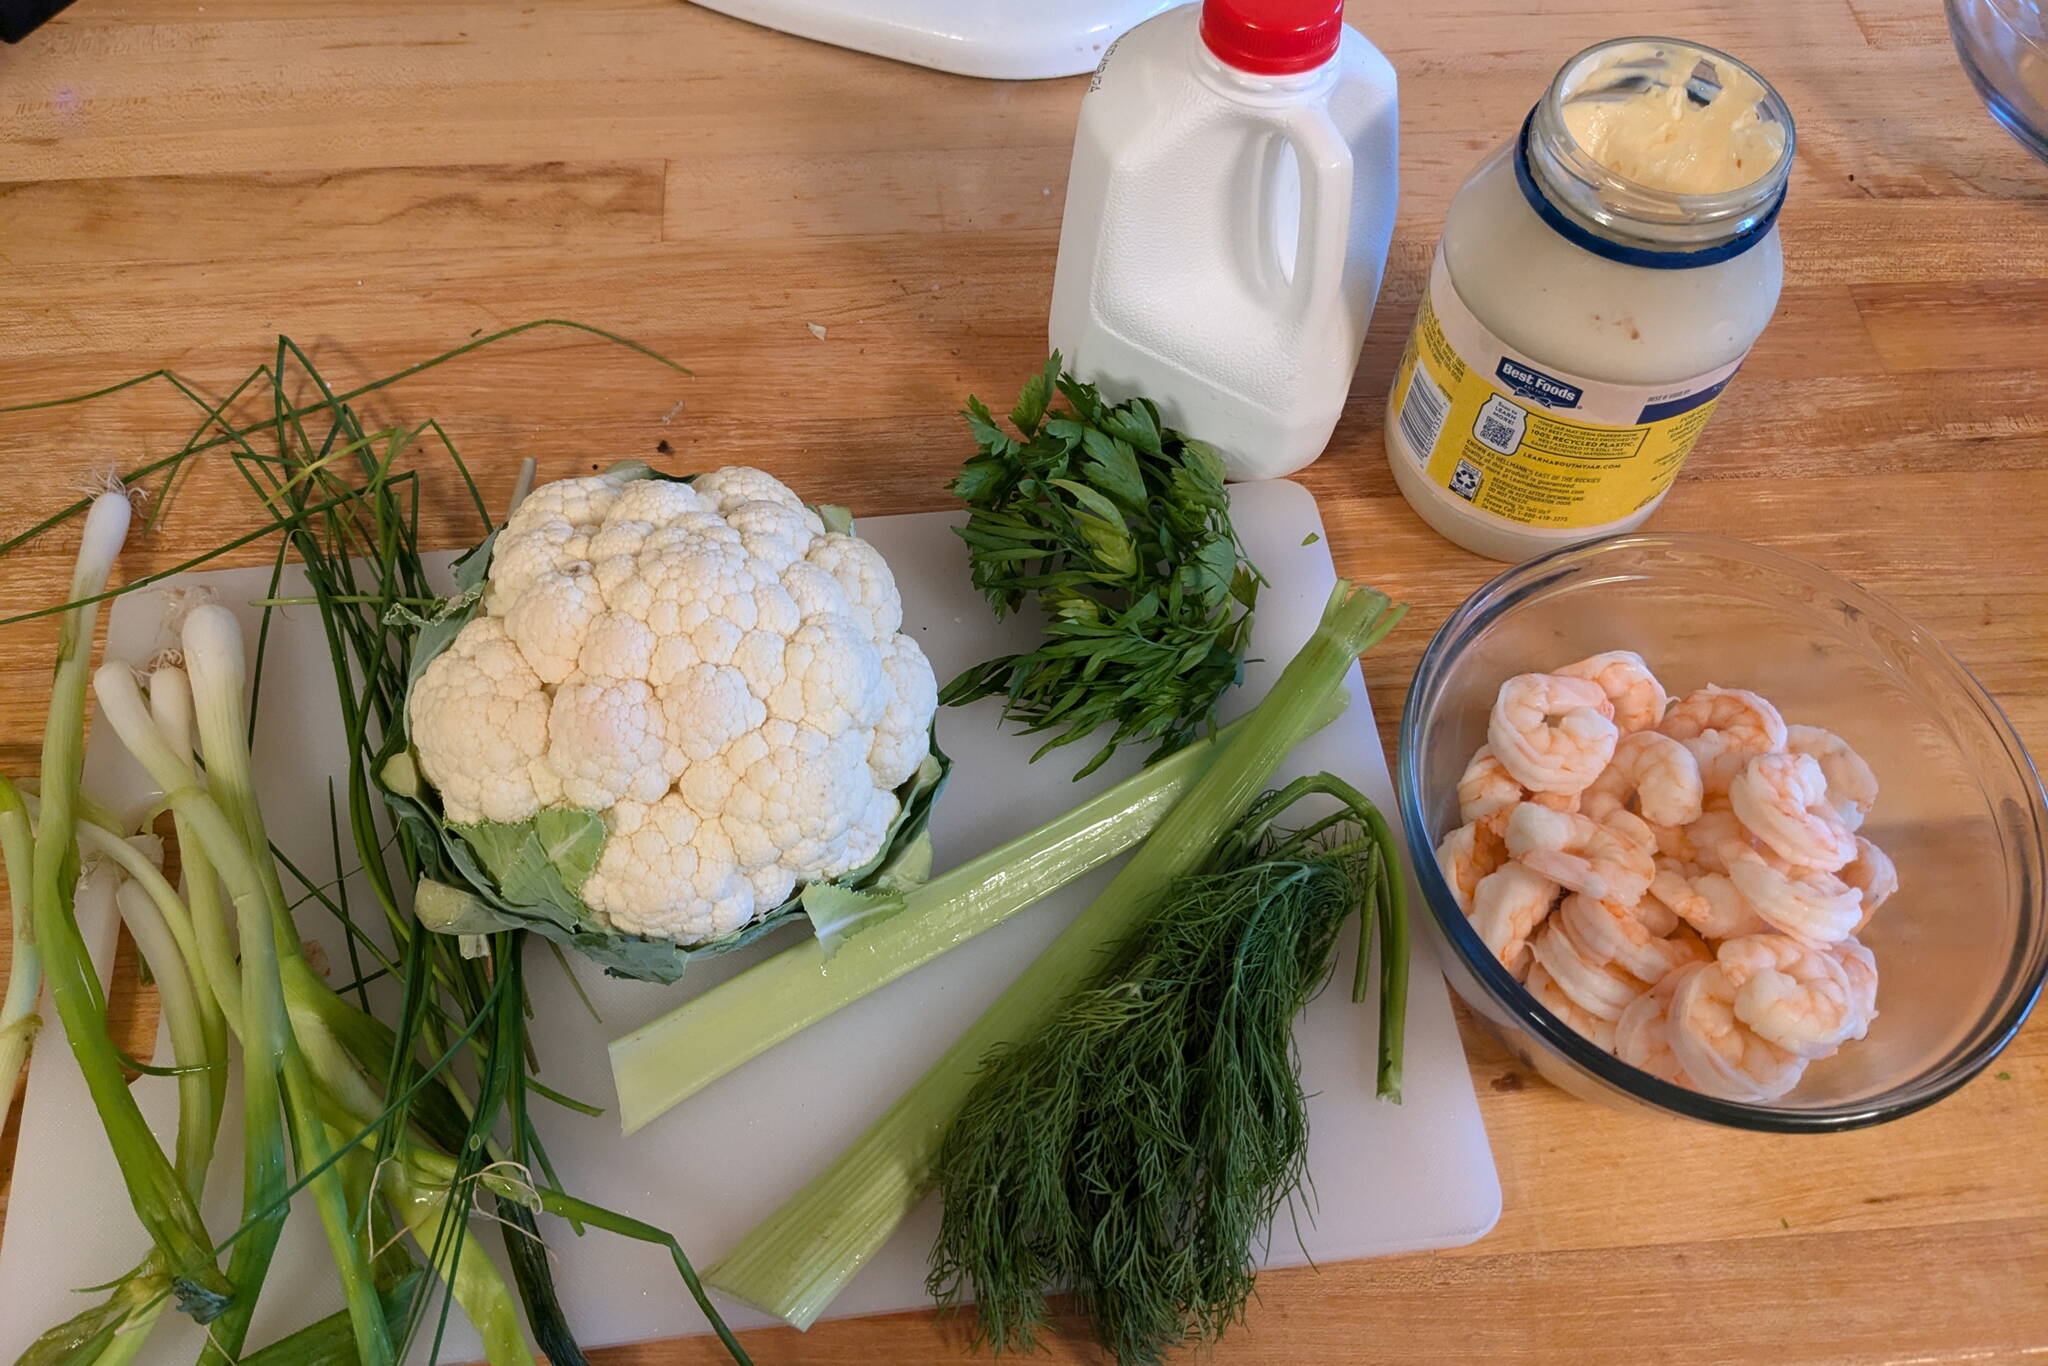 Ingredients for cauliflower shrimp salad ready to prepare. (Photo by Patty Schied)